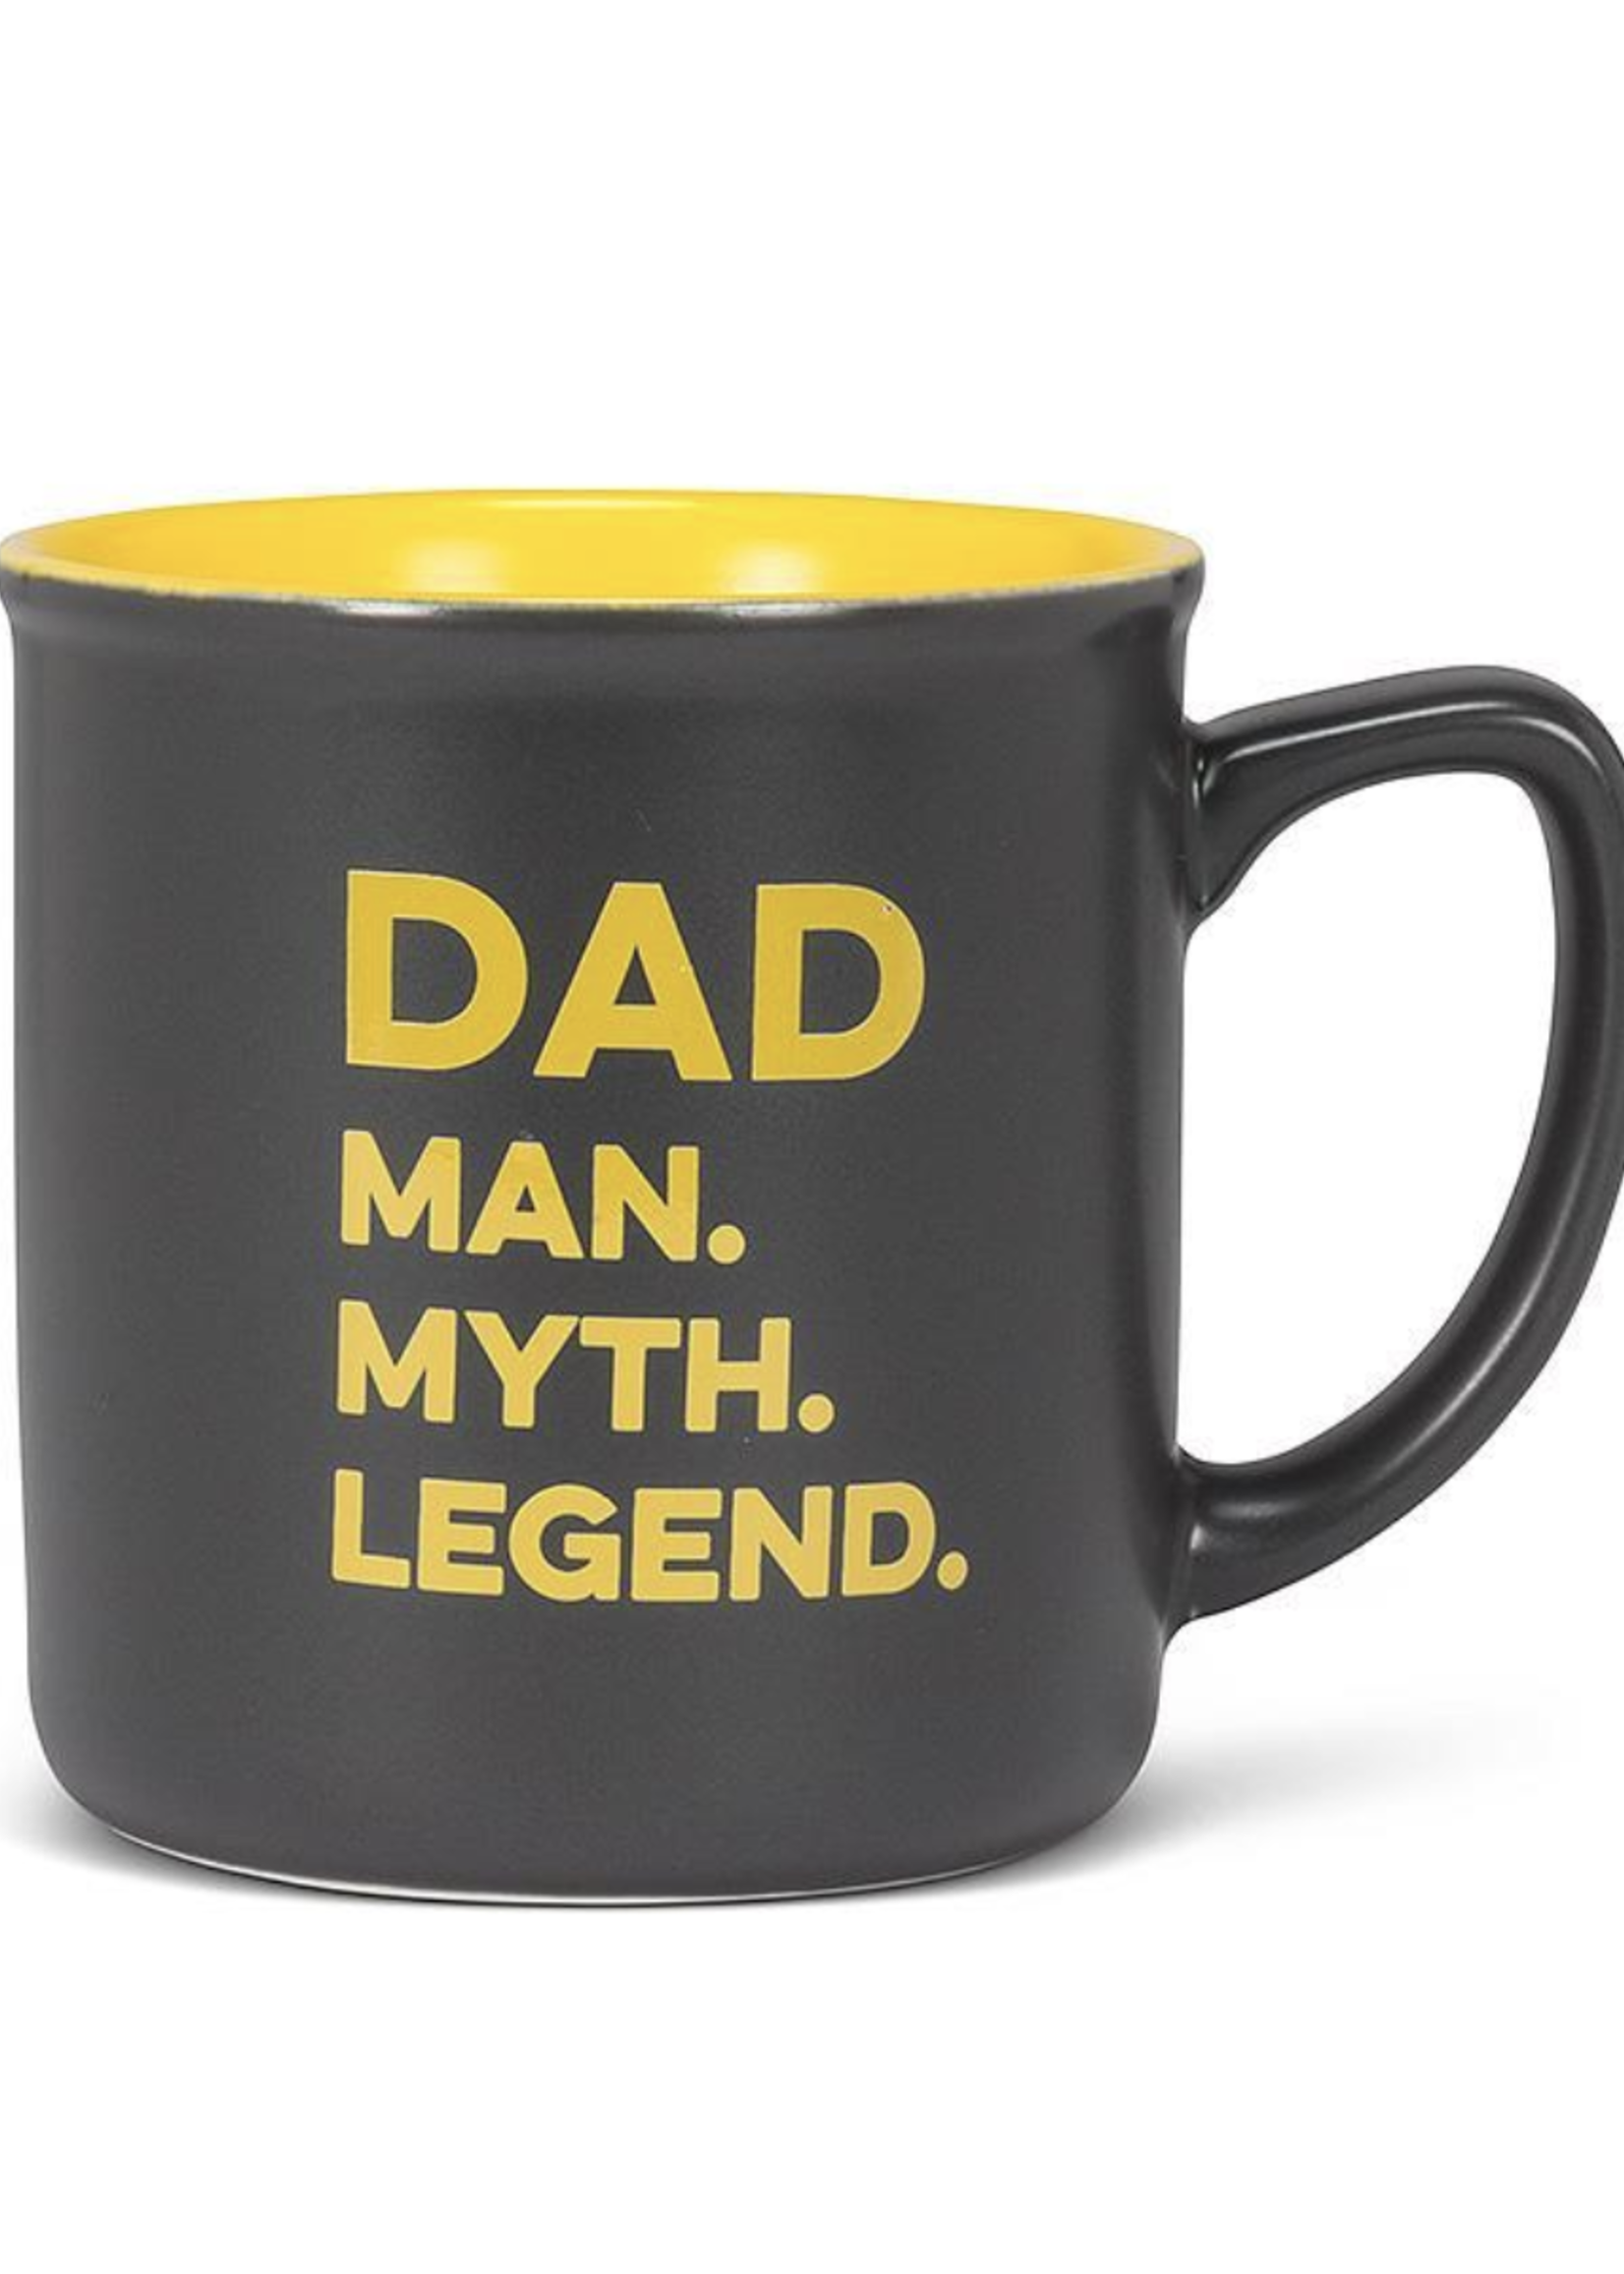 Abbott Man Myth Legend Mug